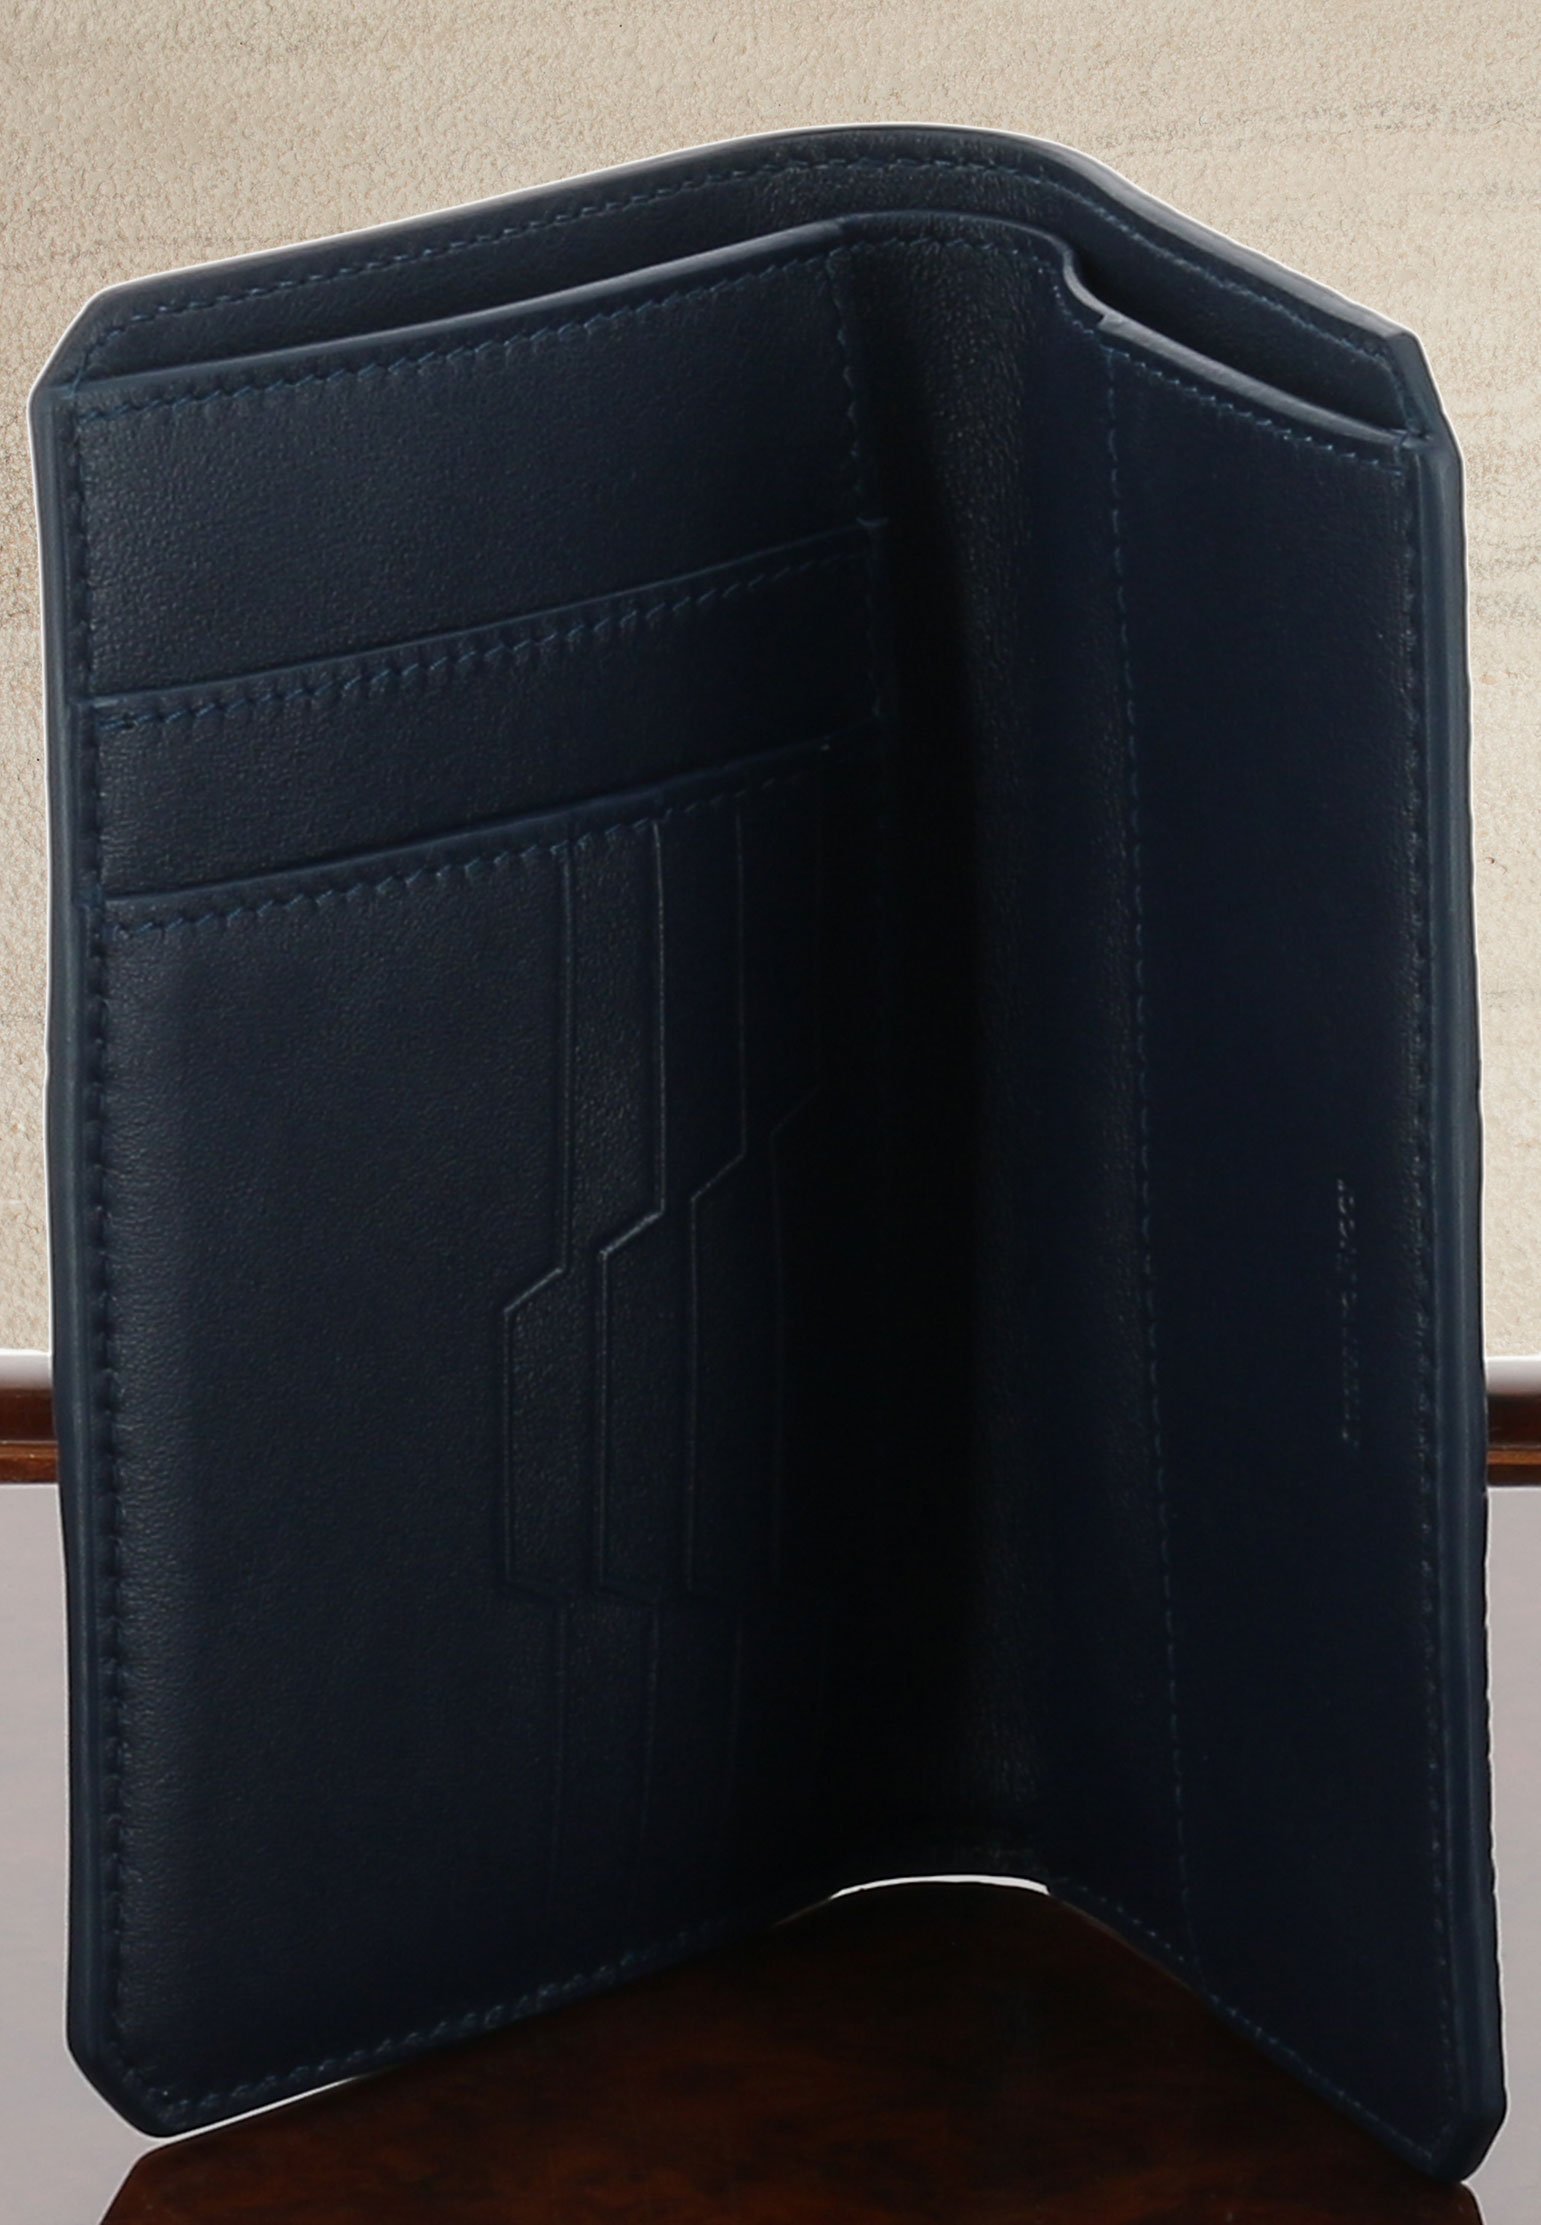 Passport holder STEFANO RICCI Color: blue marine (Code: 287) in online store Allure